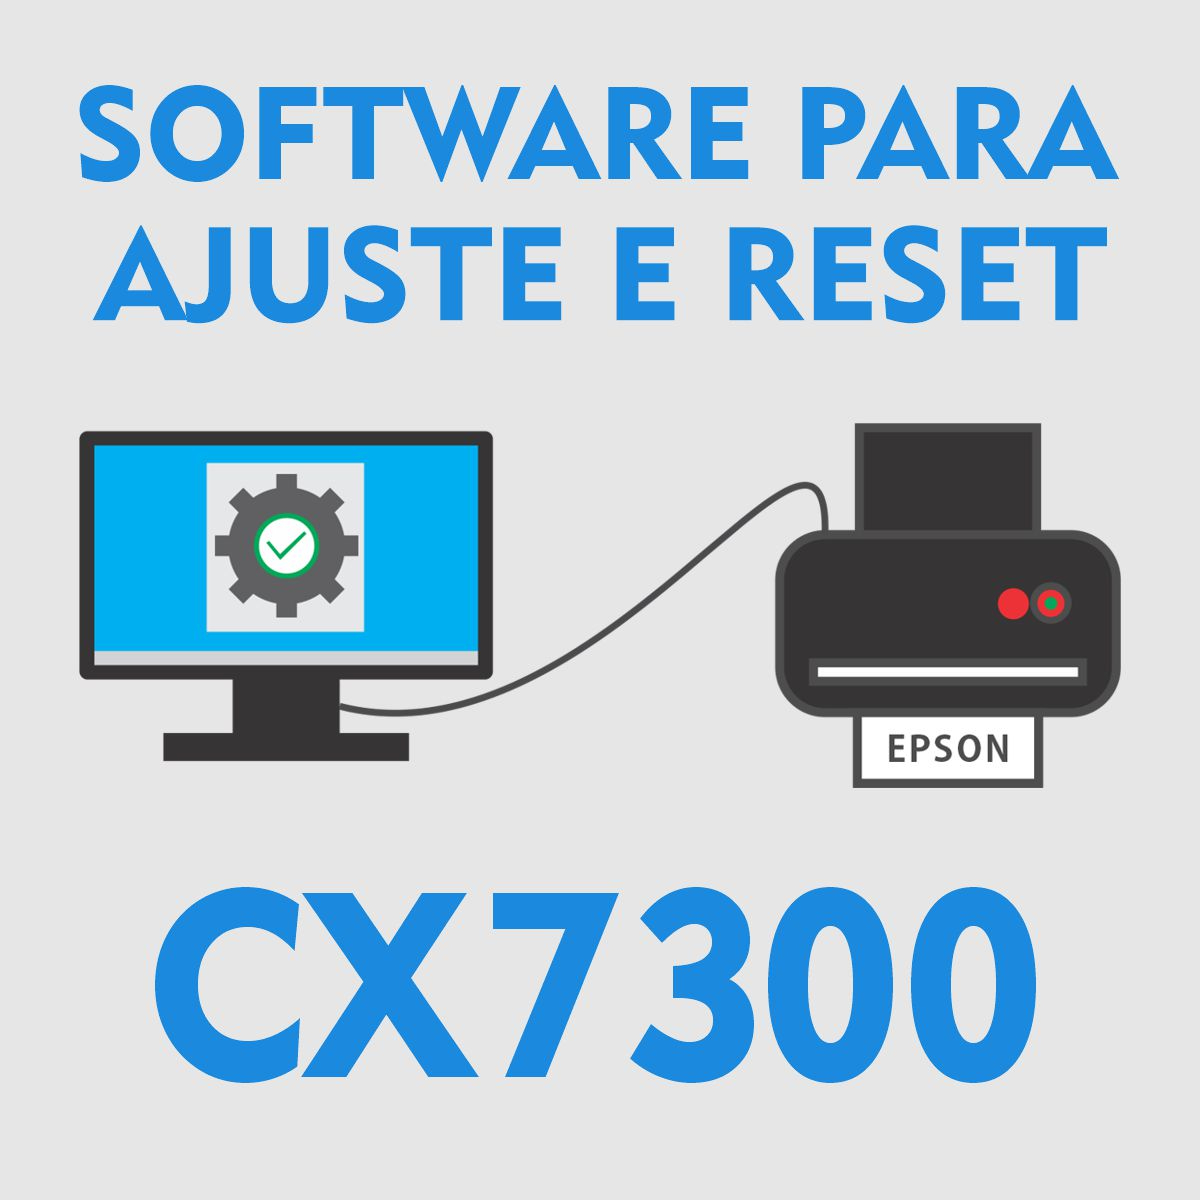 Epson CX7300 | Software para Ajustes e Reset das Almofadas